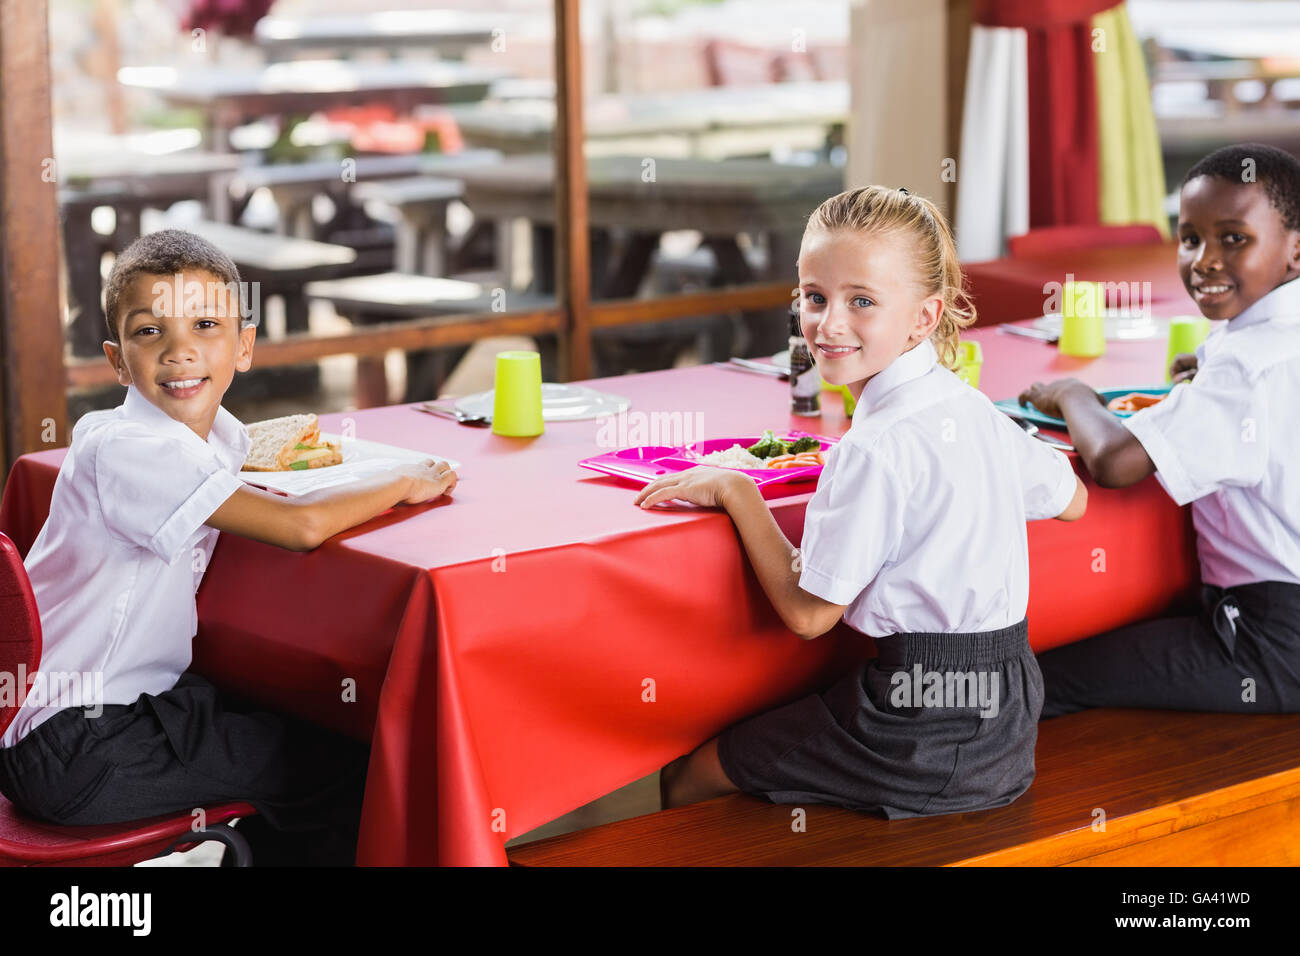 Children having lunch during break time in school cafeteria Stock Photo